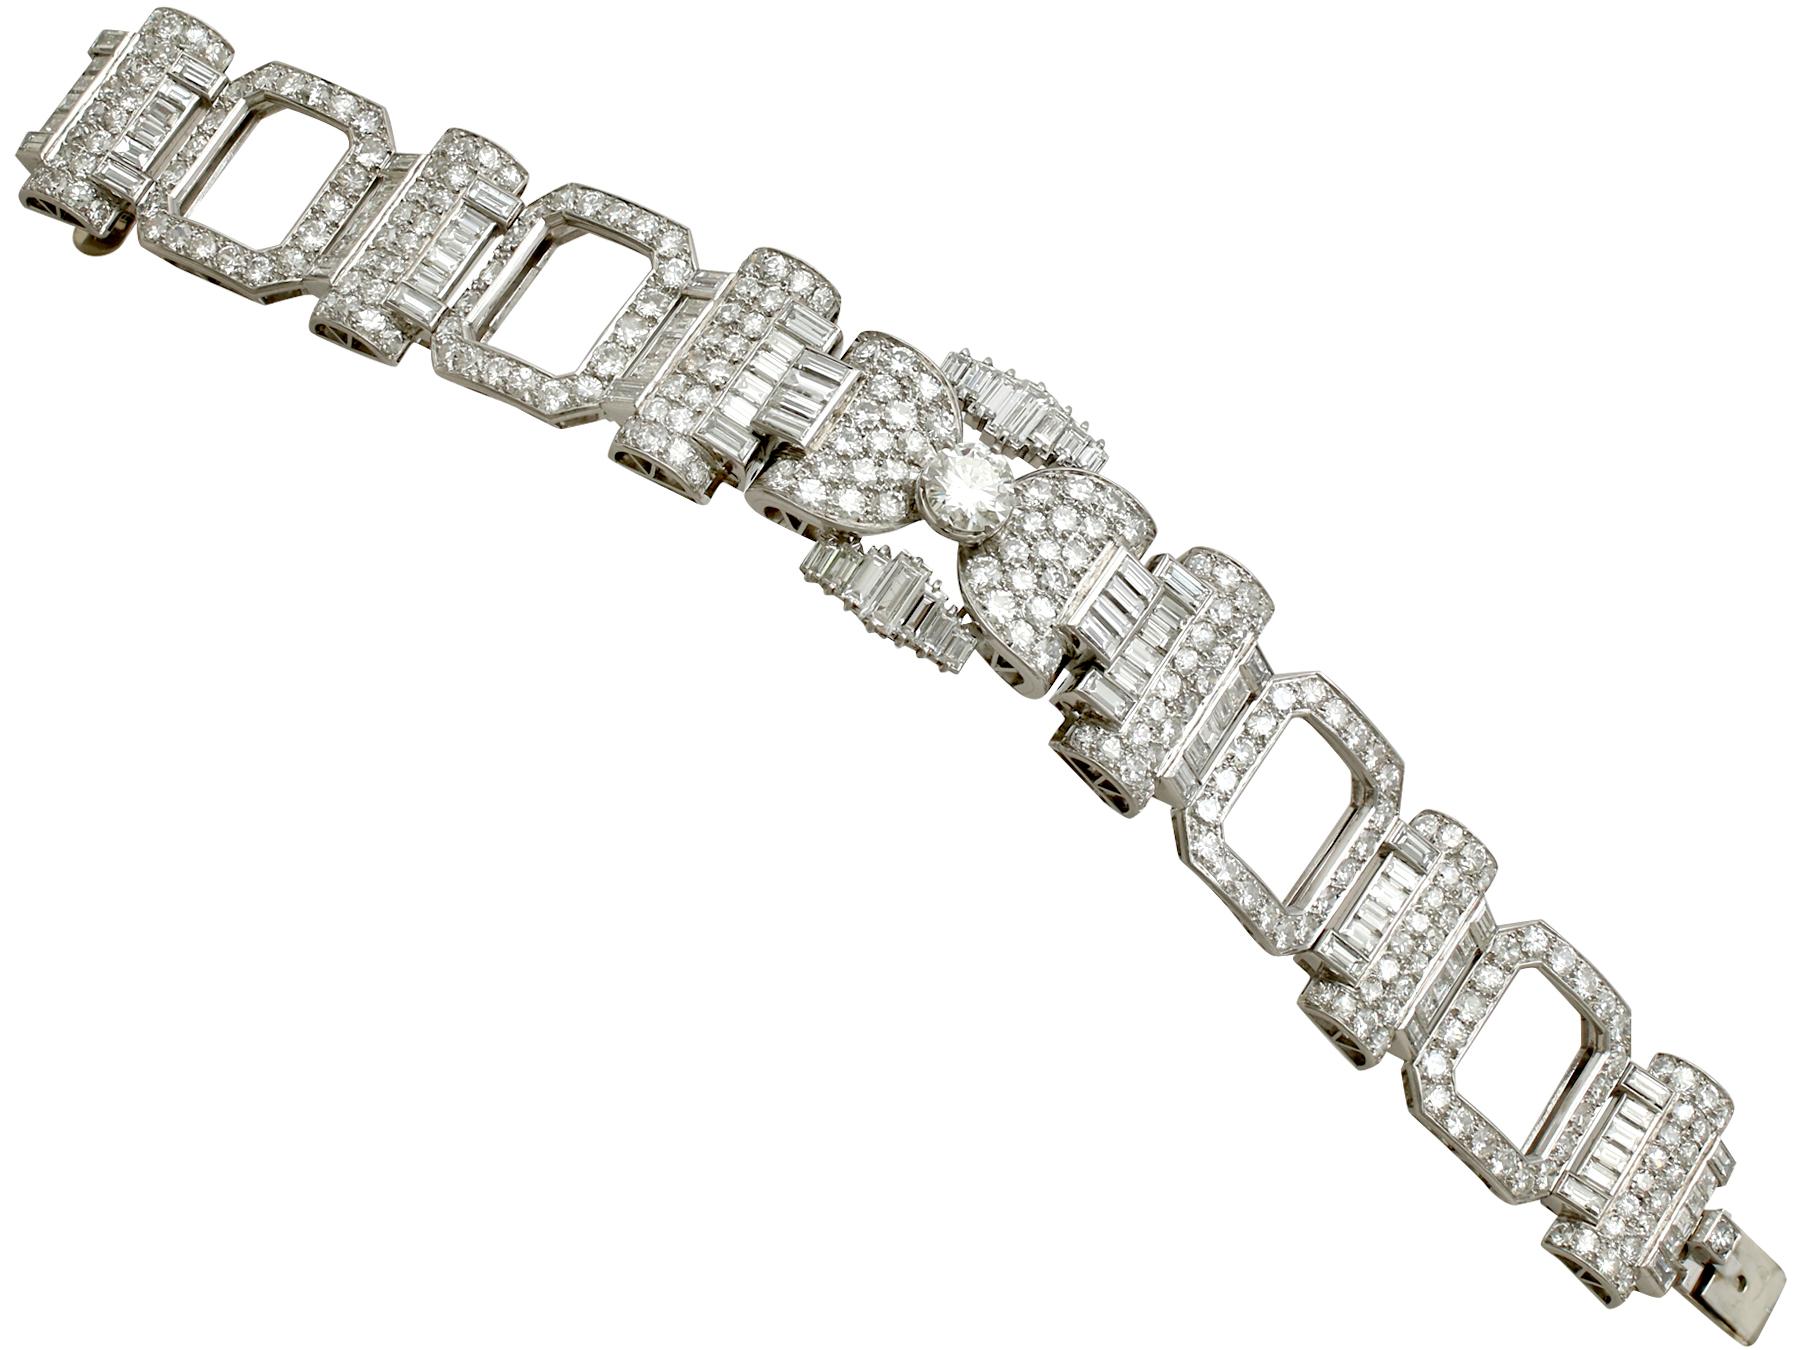 Art Deco 1950s Vintage French 21.38 Carat Diamond and Platinum Bracelet